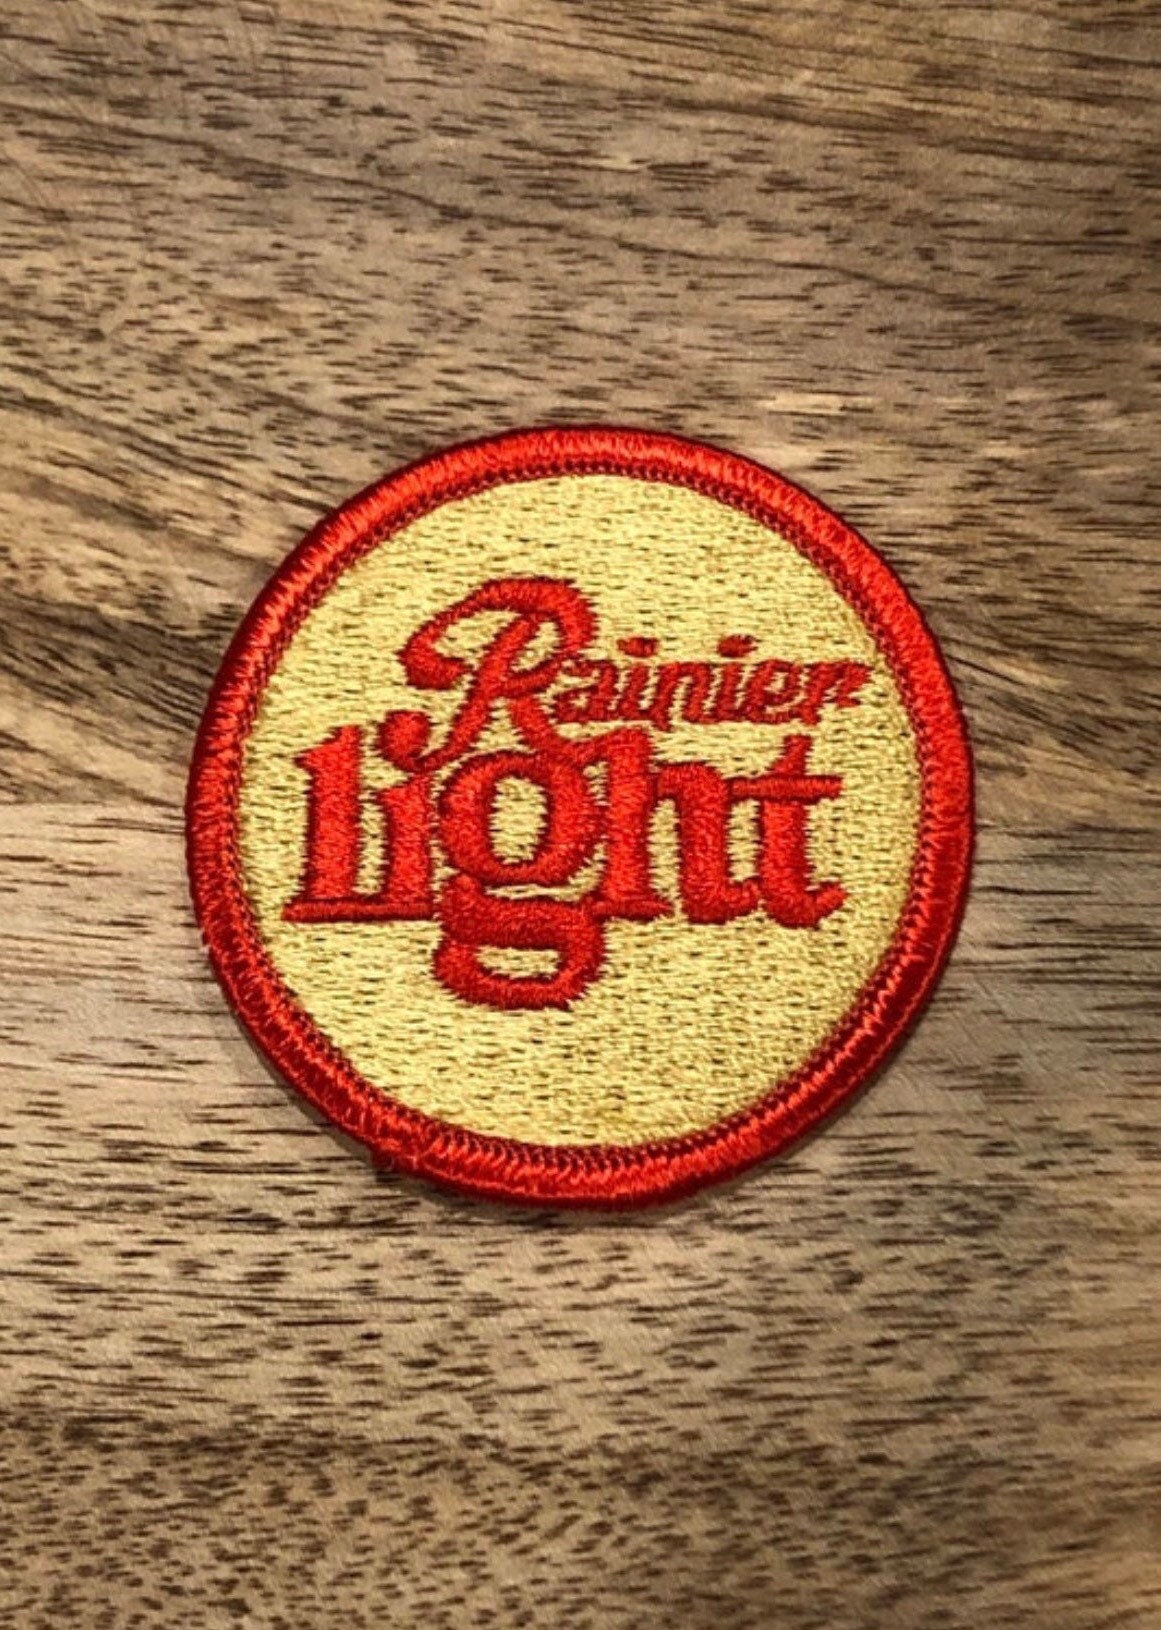 Retro Rainier Light Beer Circular Patch